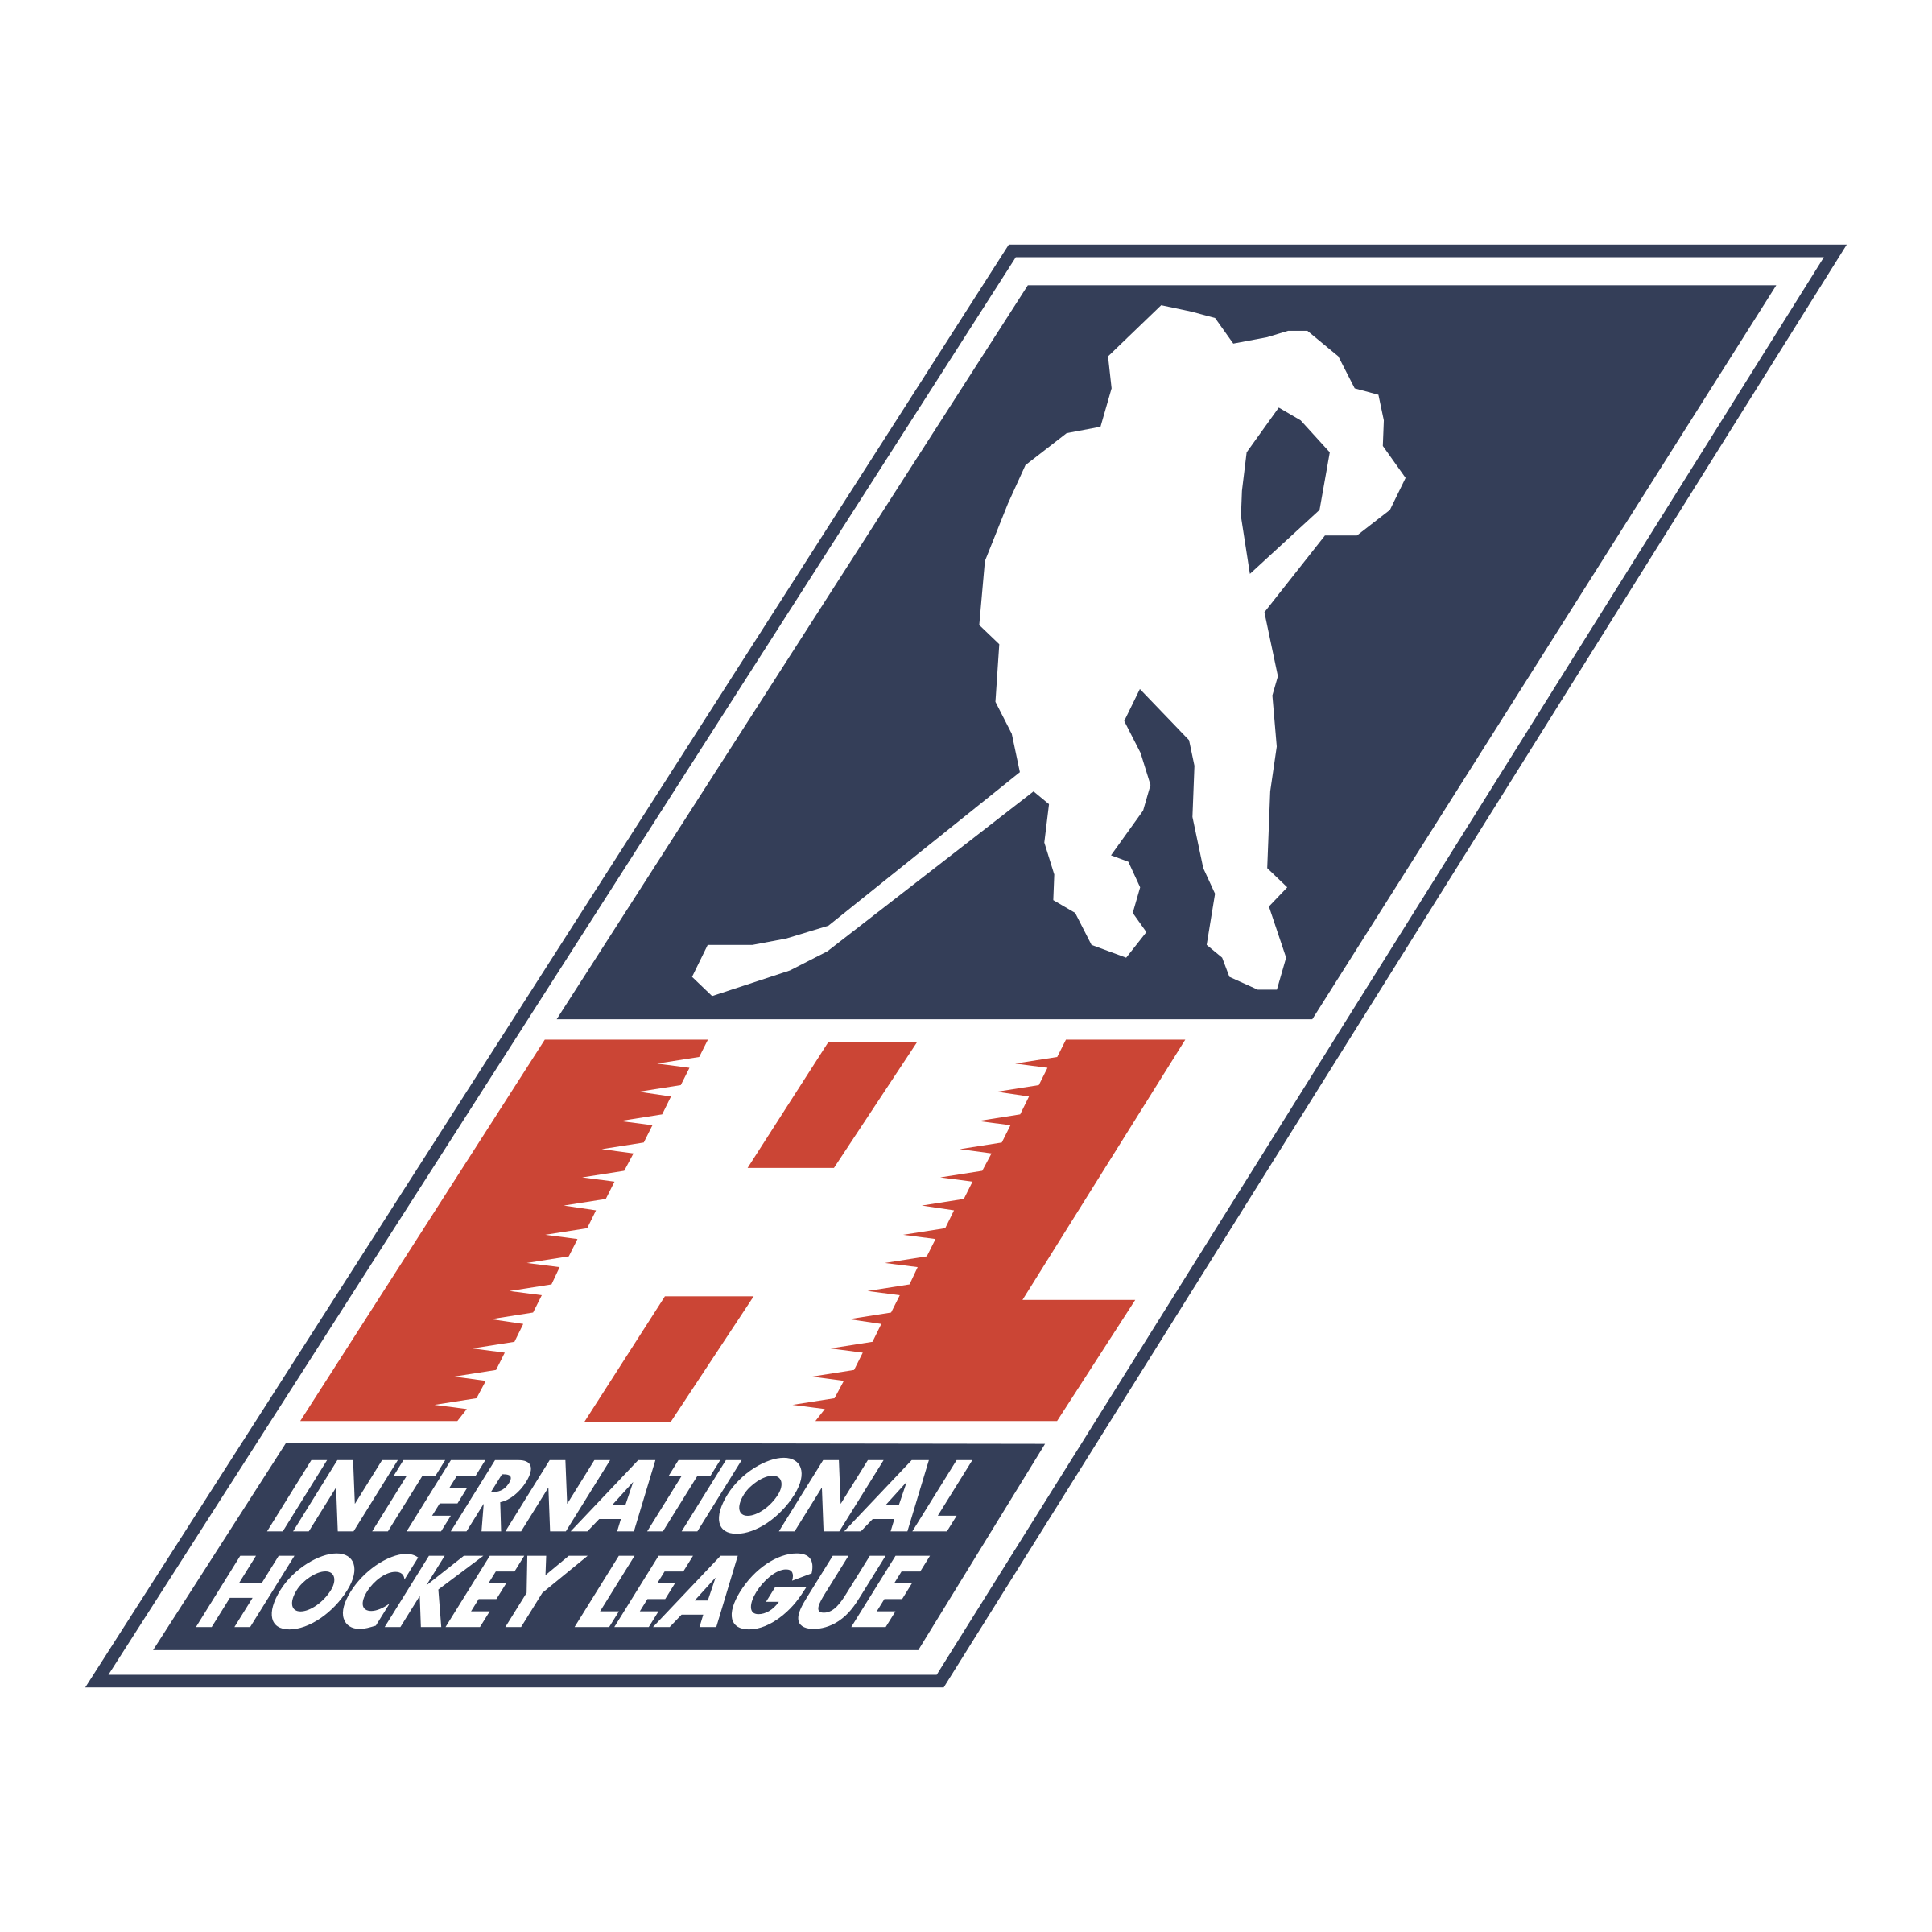 IHL Logo - IHL Logo PNG Transparent & SVG Vector - Freebie Supply